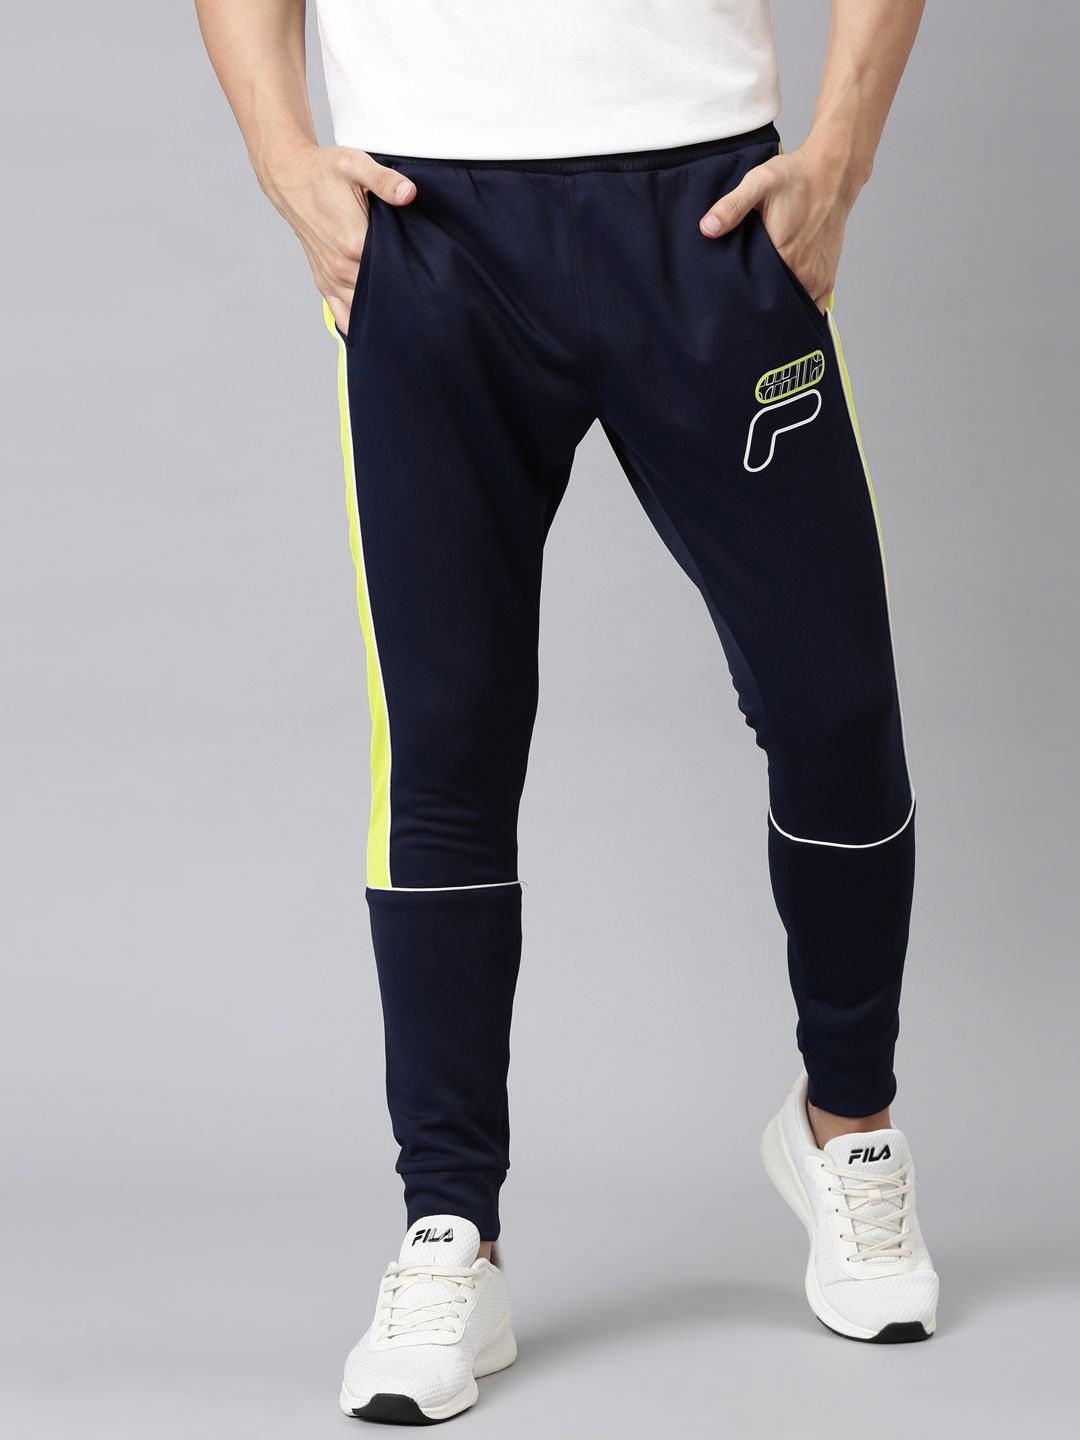 Men's trousers Fila Pants Ethan - fila navy | Tennis Zone | Tennis Shop